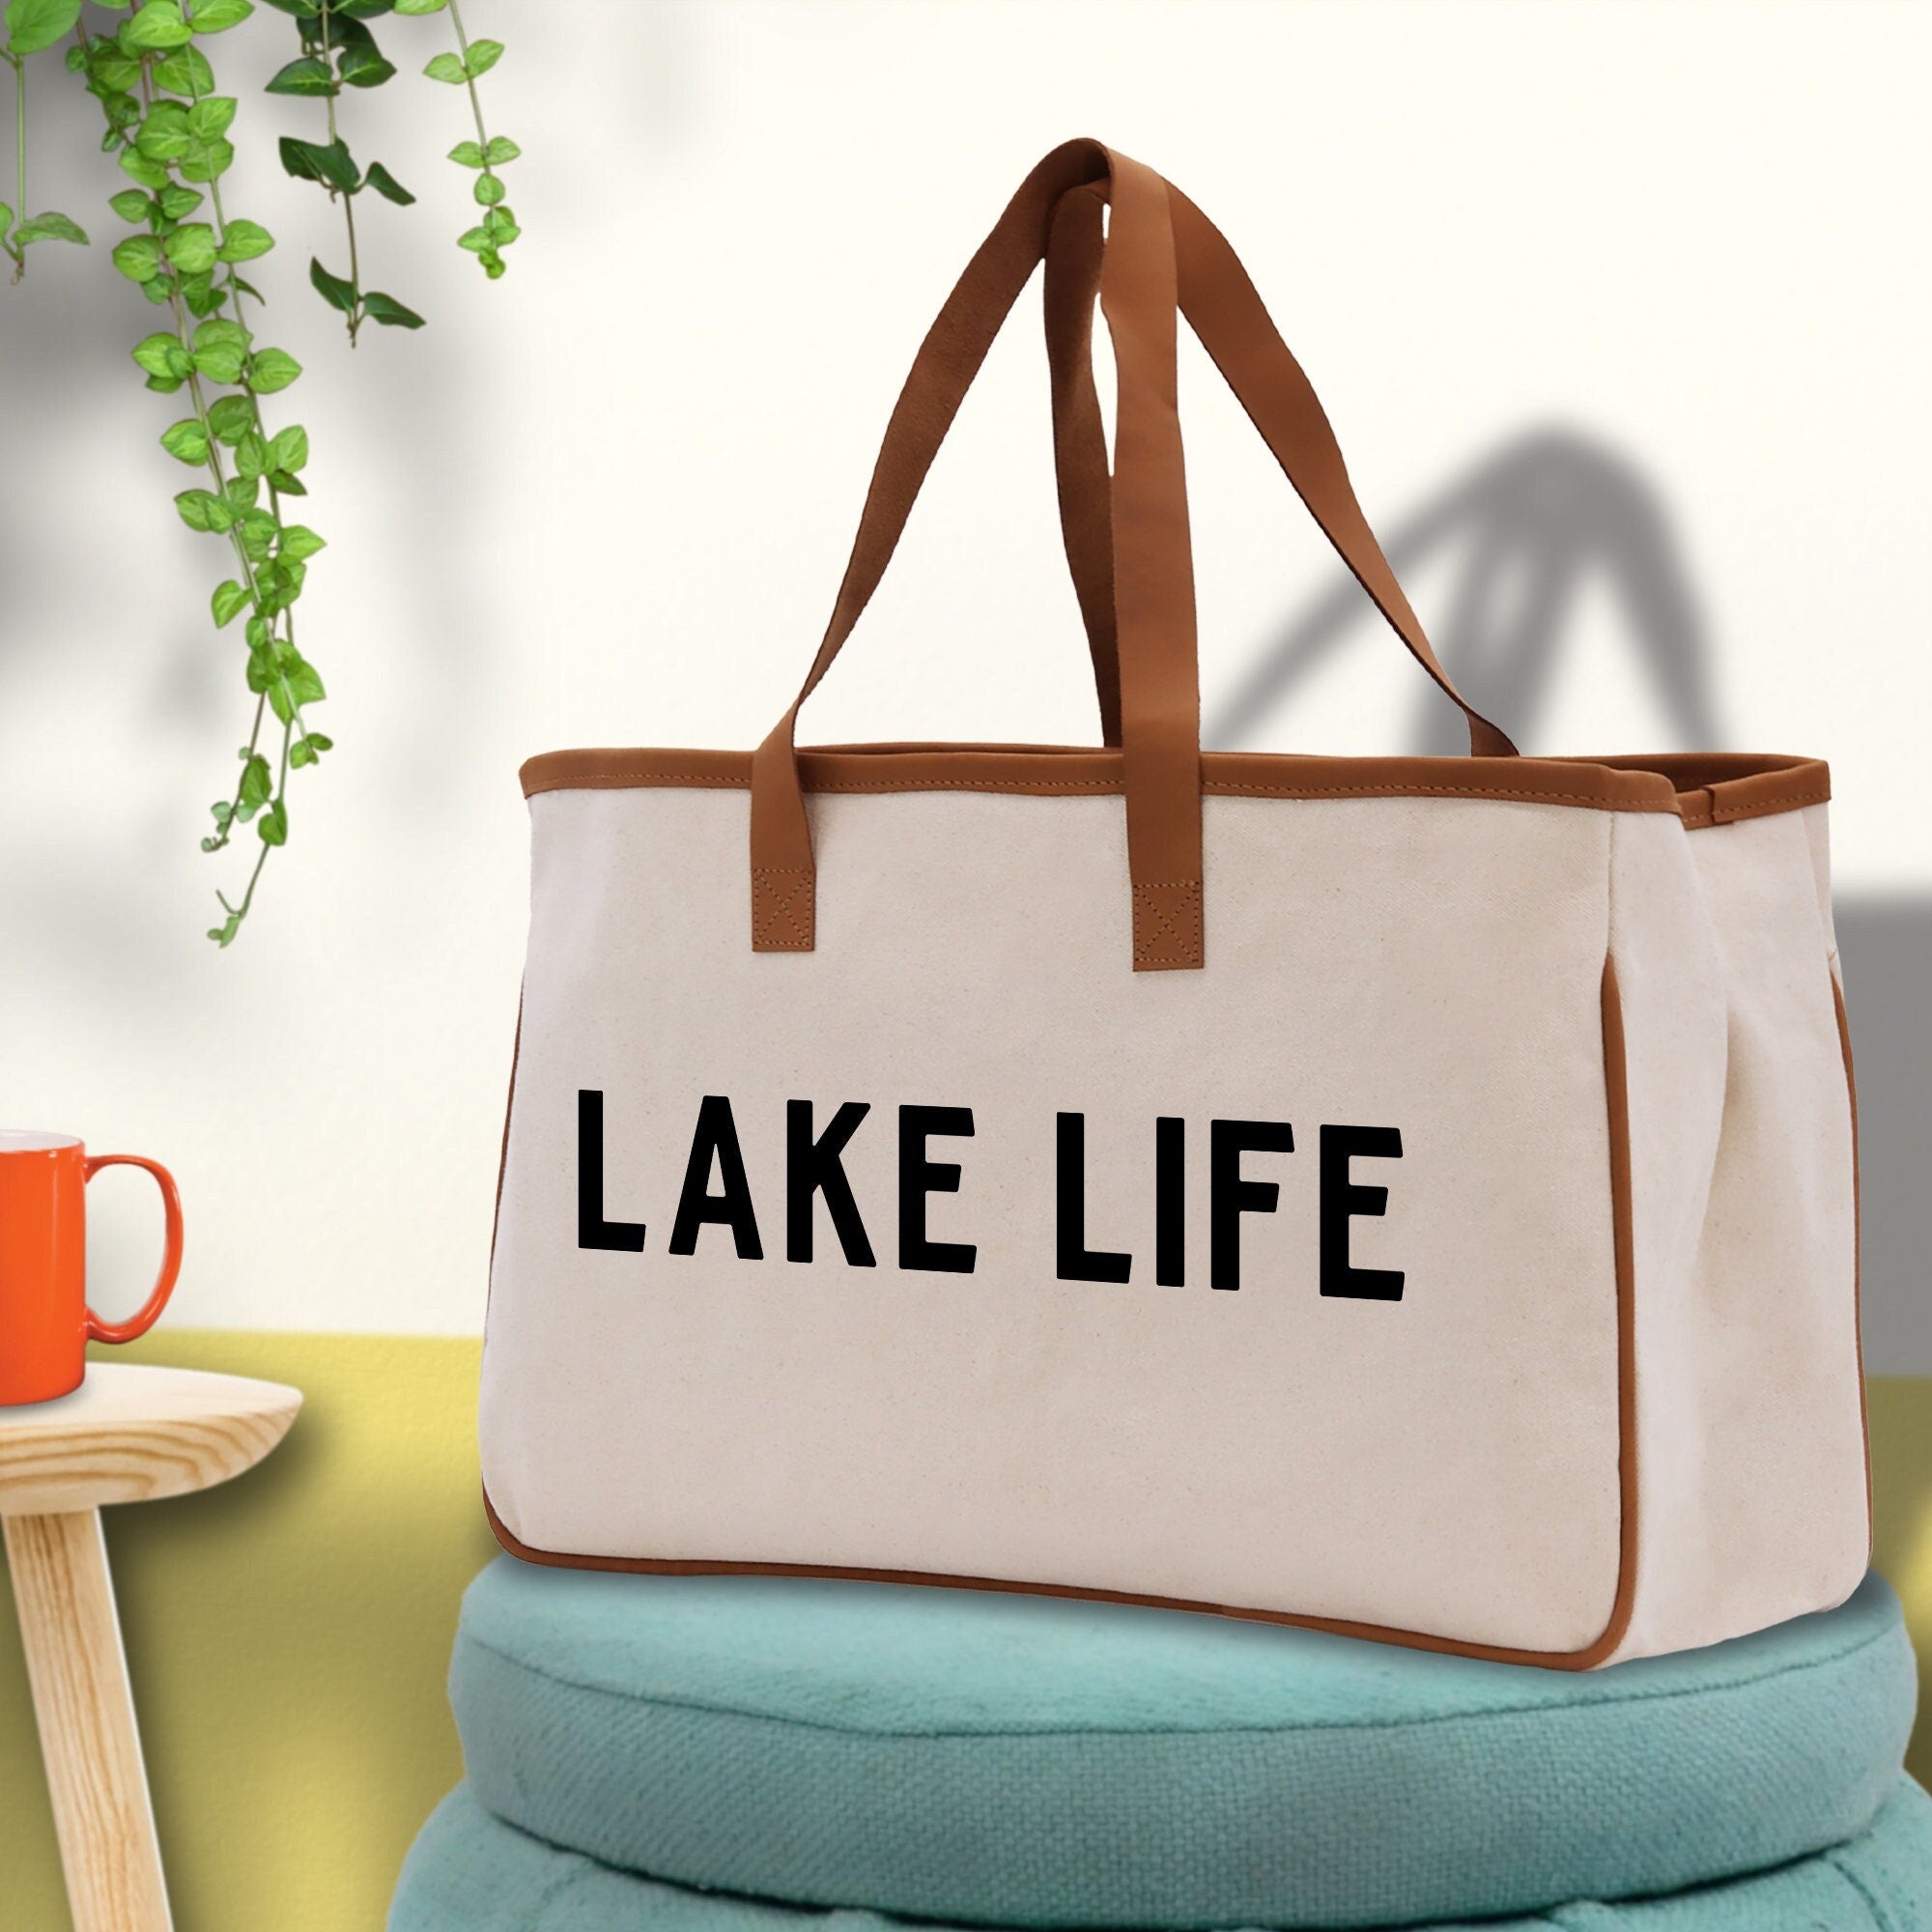 Lake Life Tote Bag - Large Chic Tote Bag - Gift for Her - Girls Weekend Tote - Weekender Bag - Weekend Tote - Boat Bag - Lake Life Gift